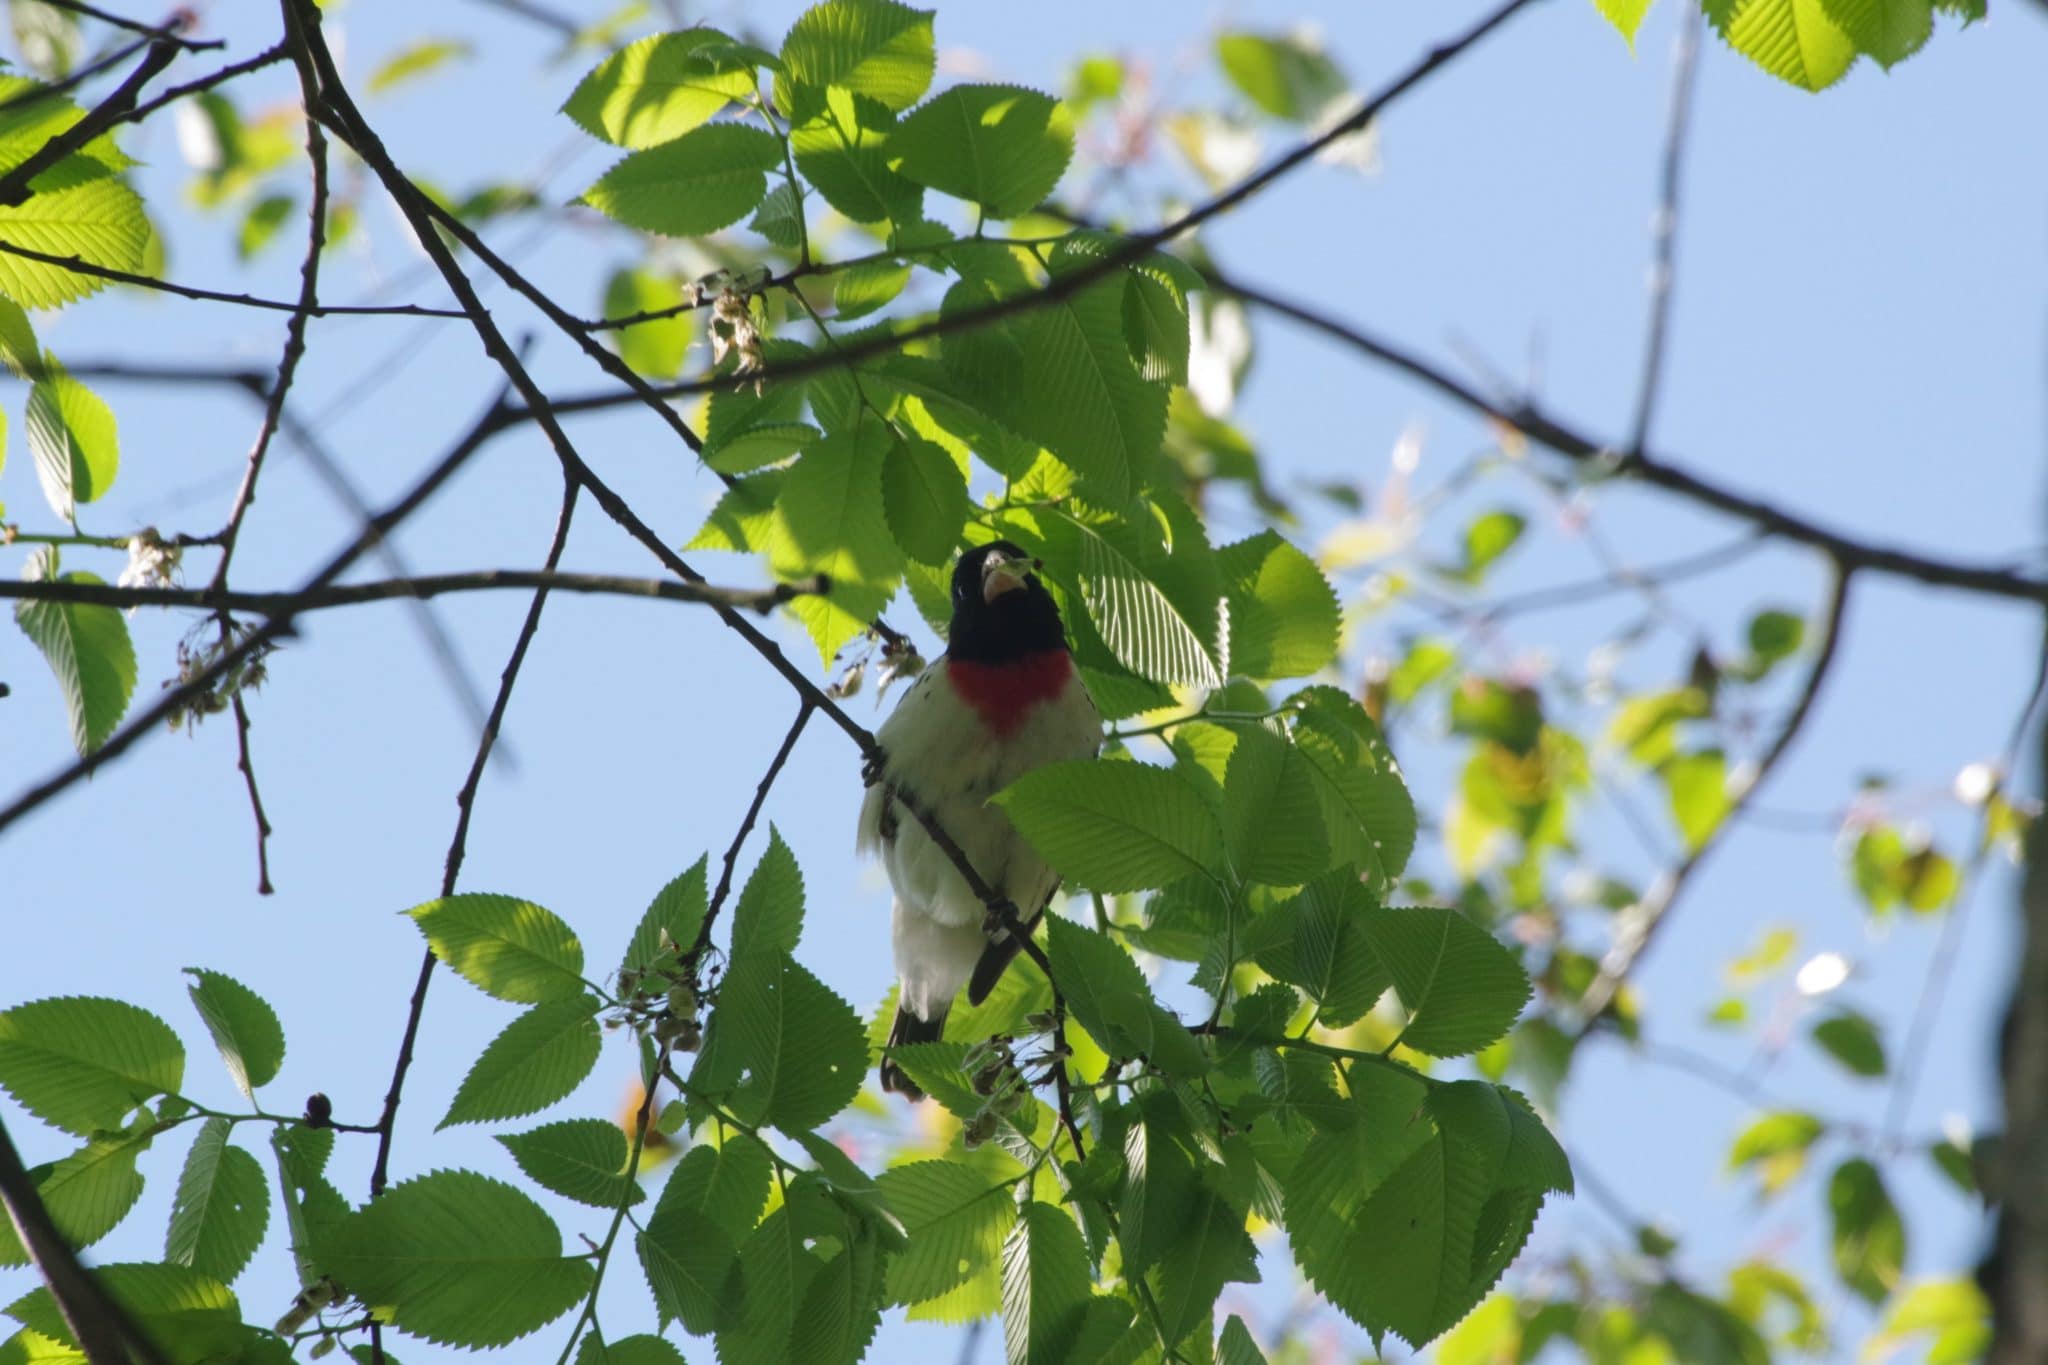 Rose-breasted grosbeak in a tree